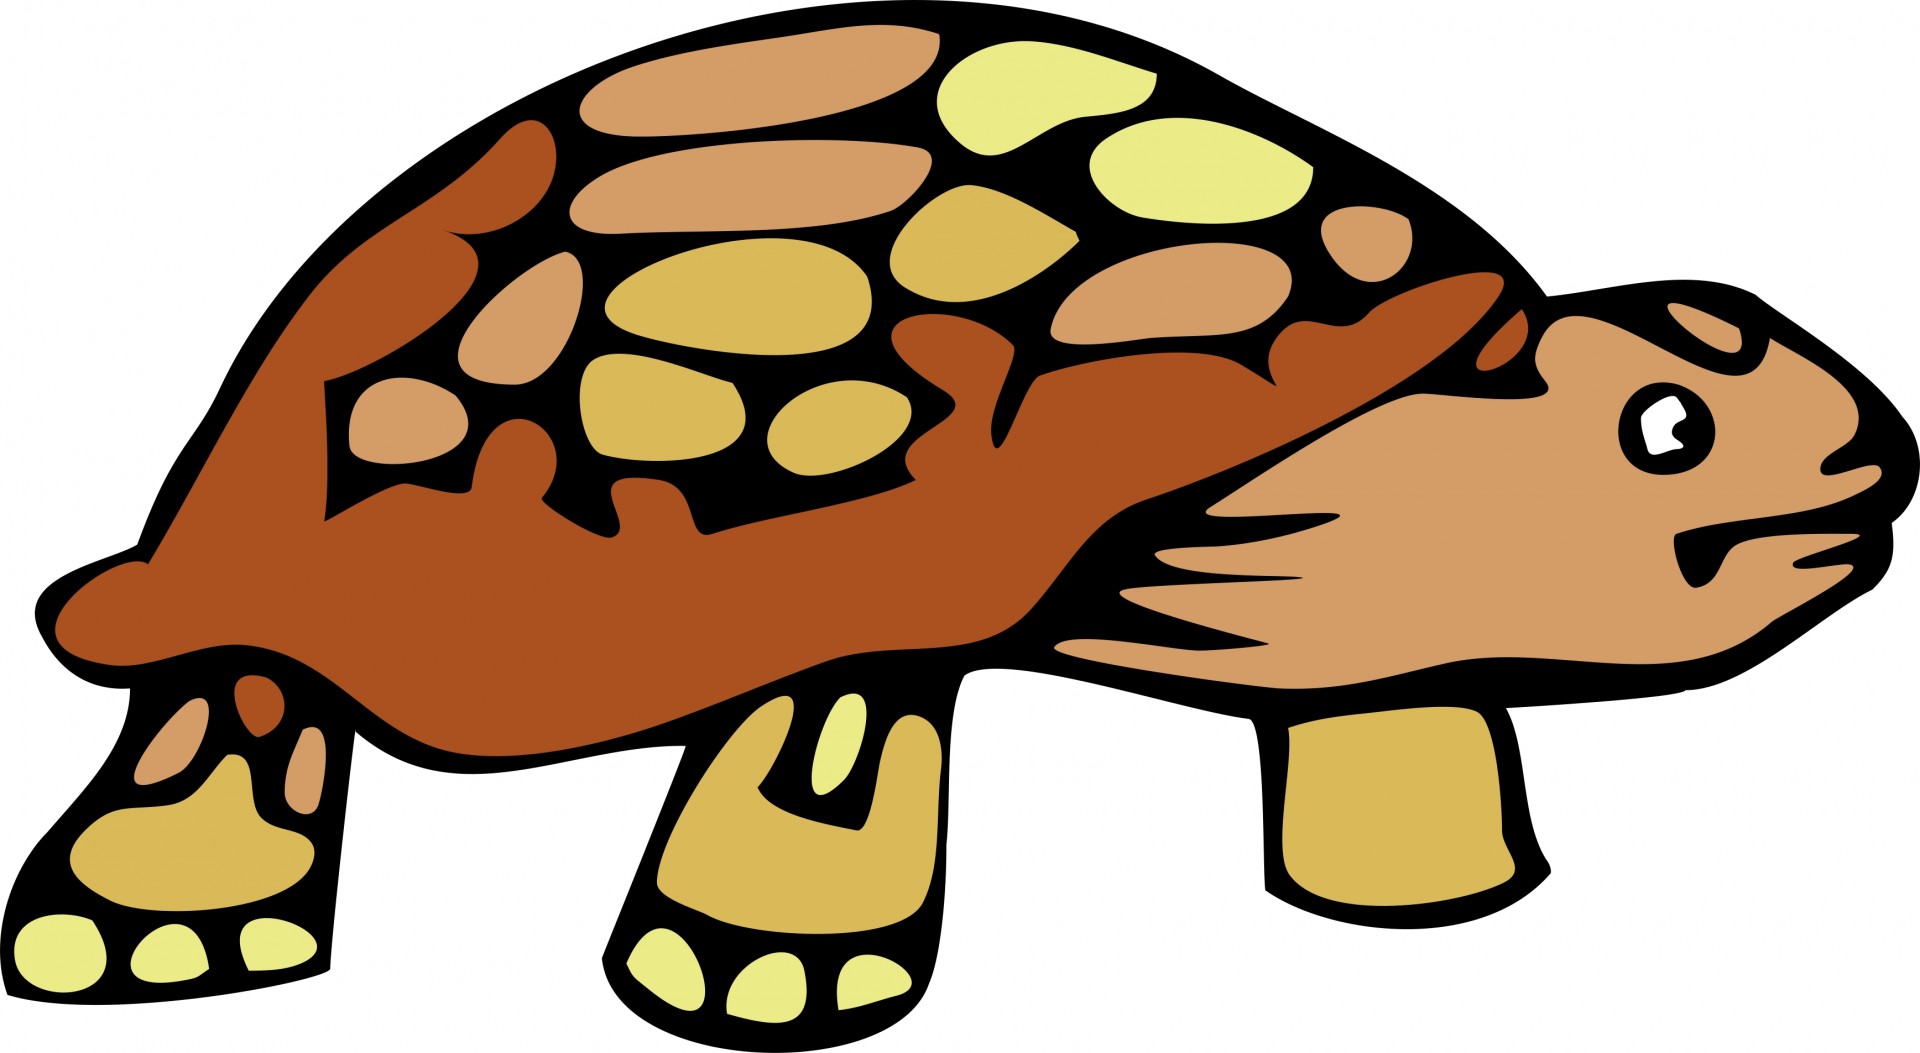 Clipart images of tortoise - ClipartFox